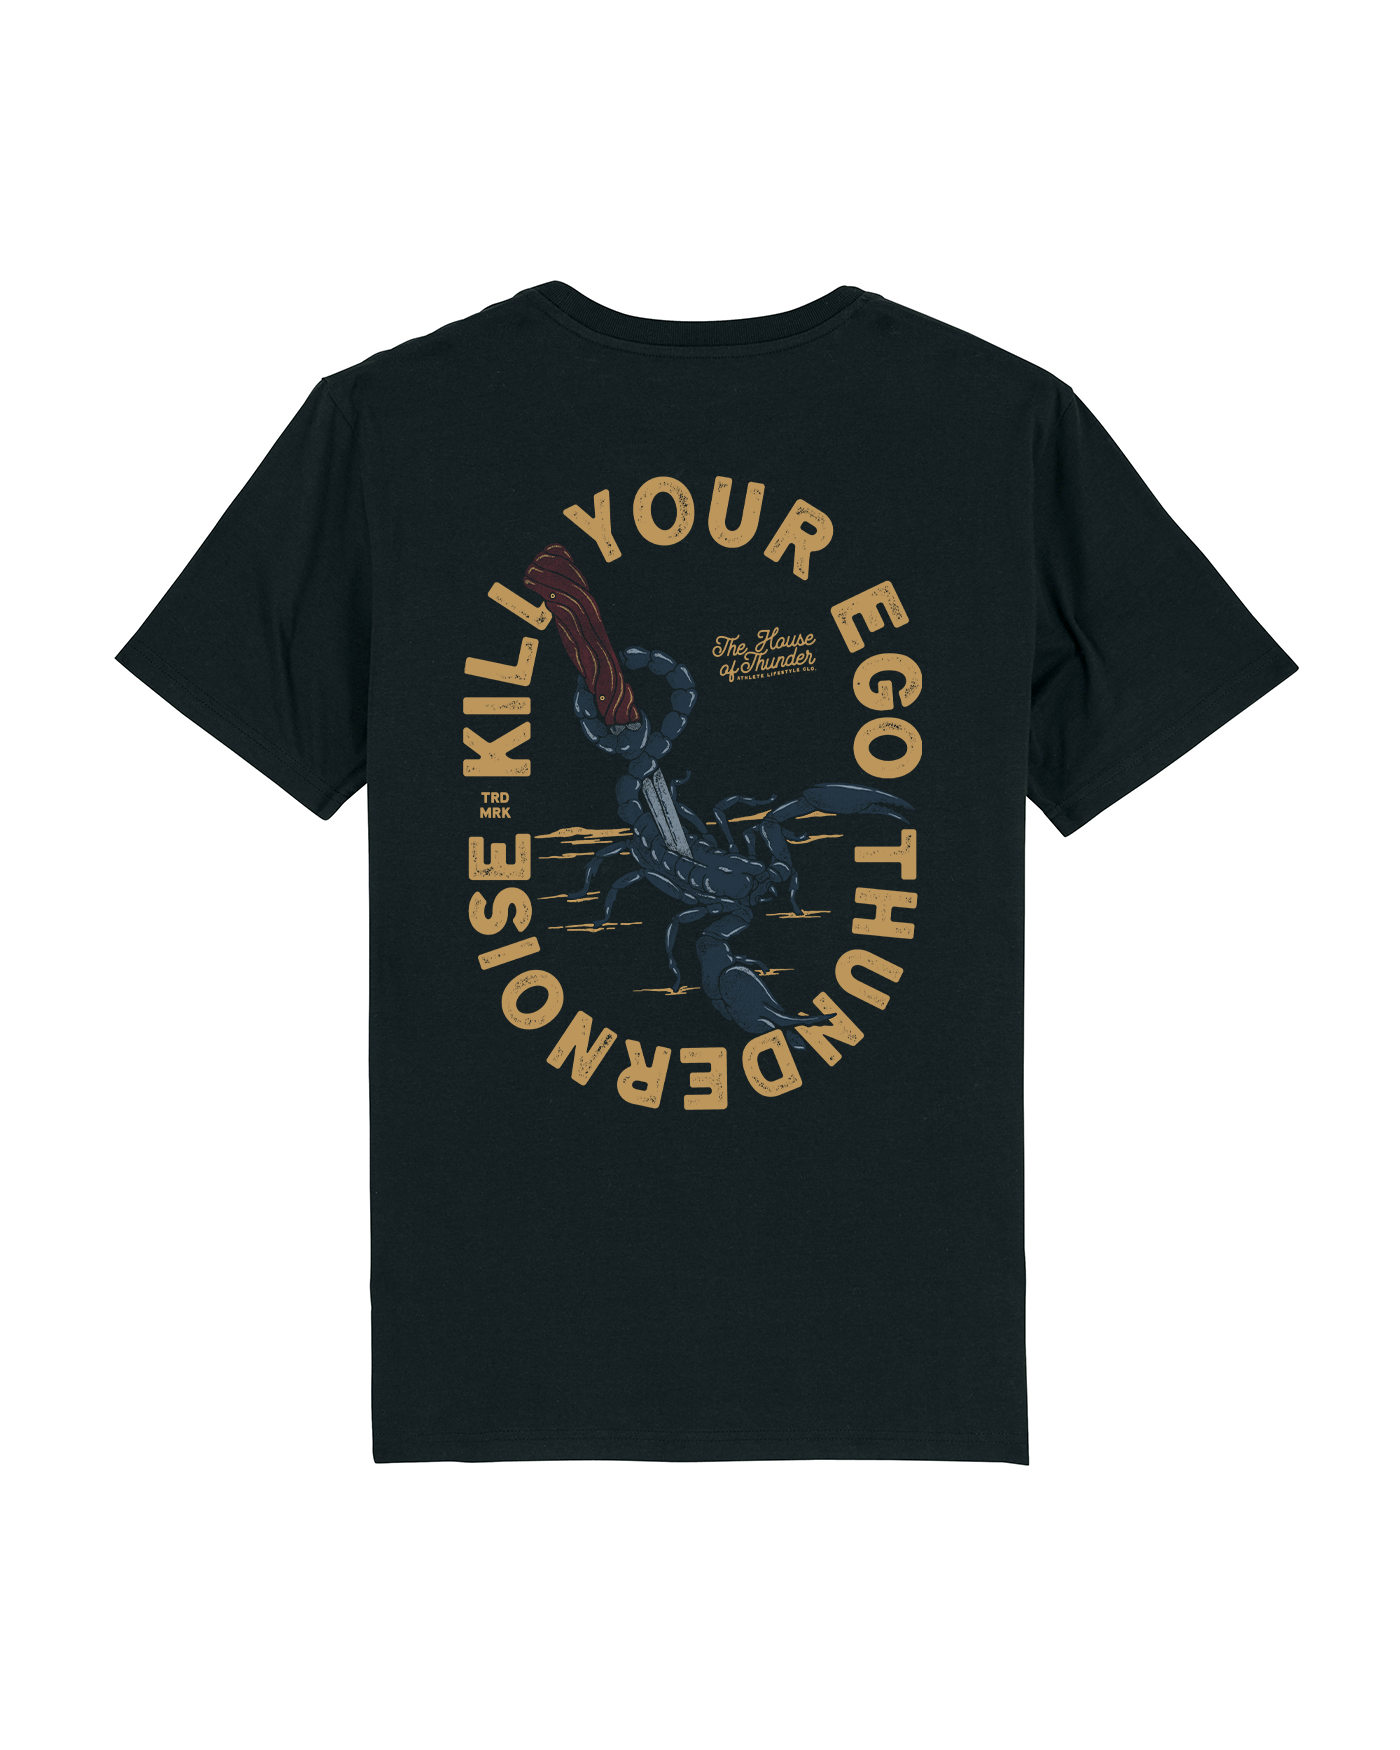 Kill Your Ego T-shirt - Black